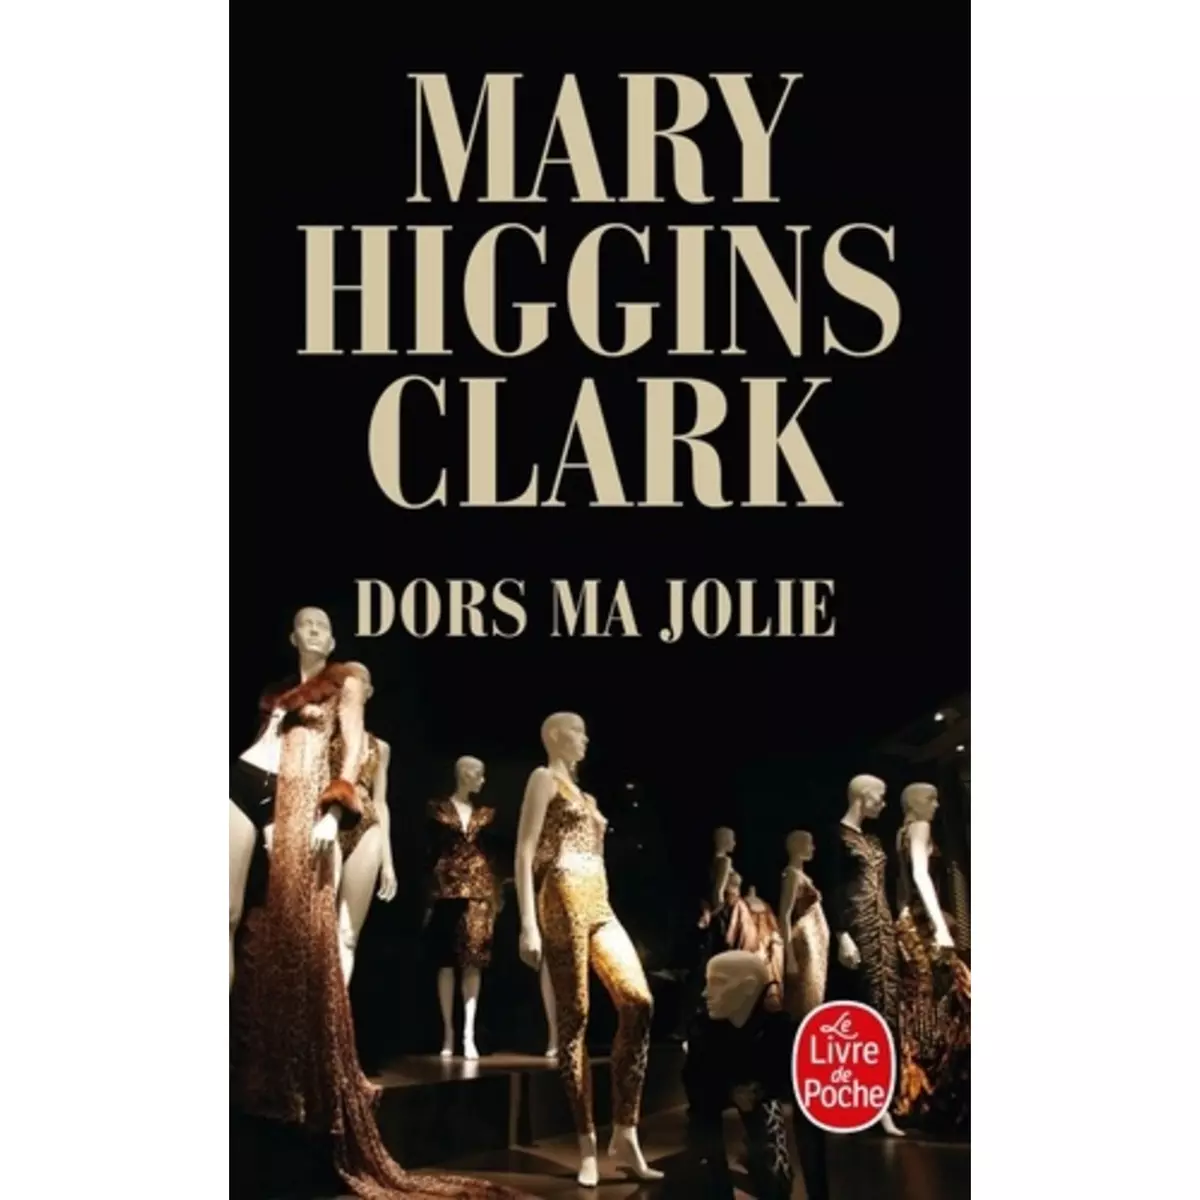  DORS MA JOLIE, Higgins Clark Mary